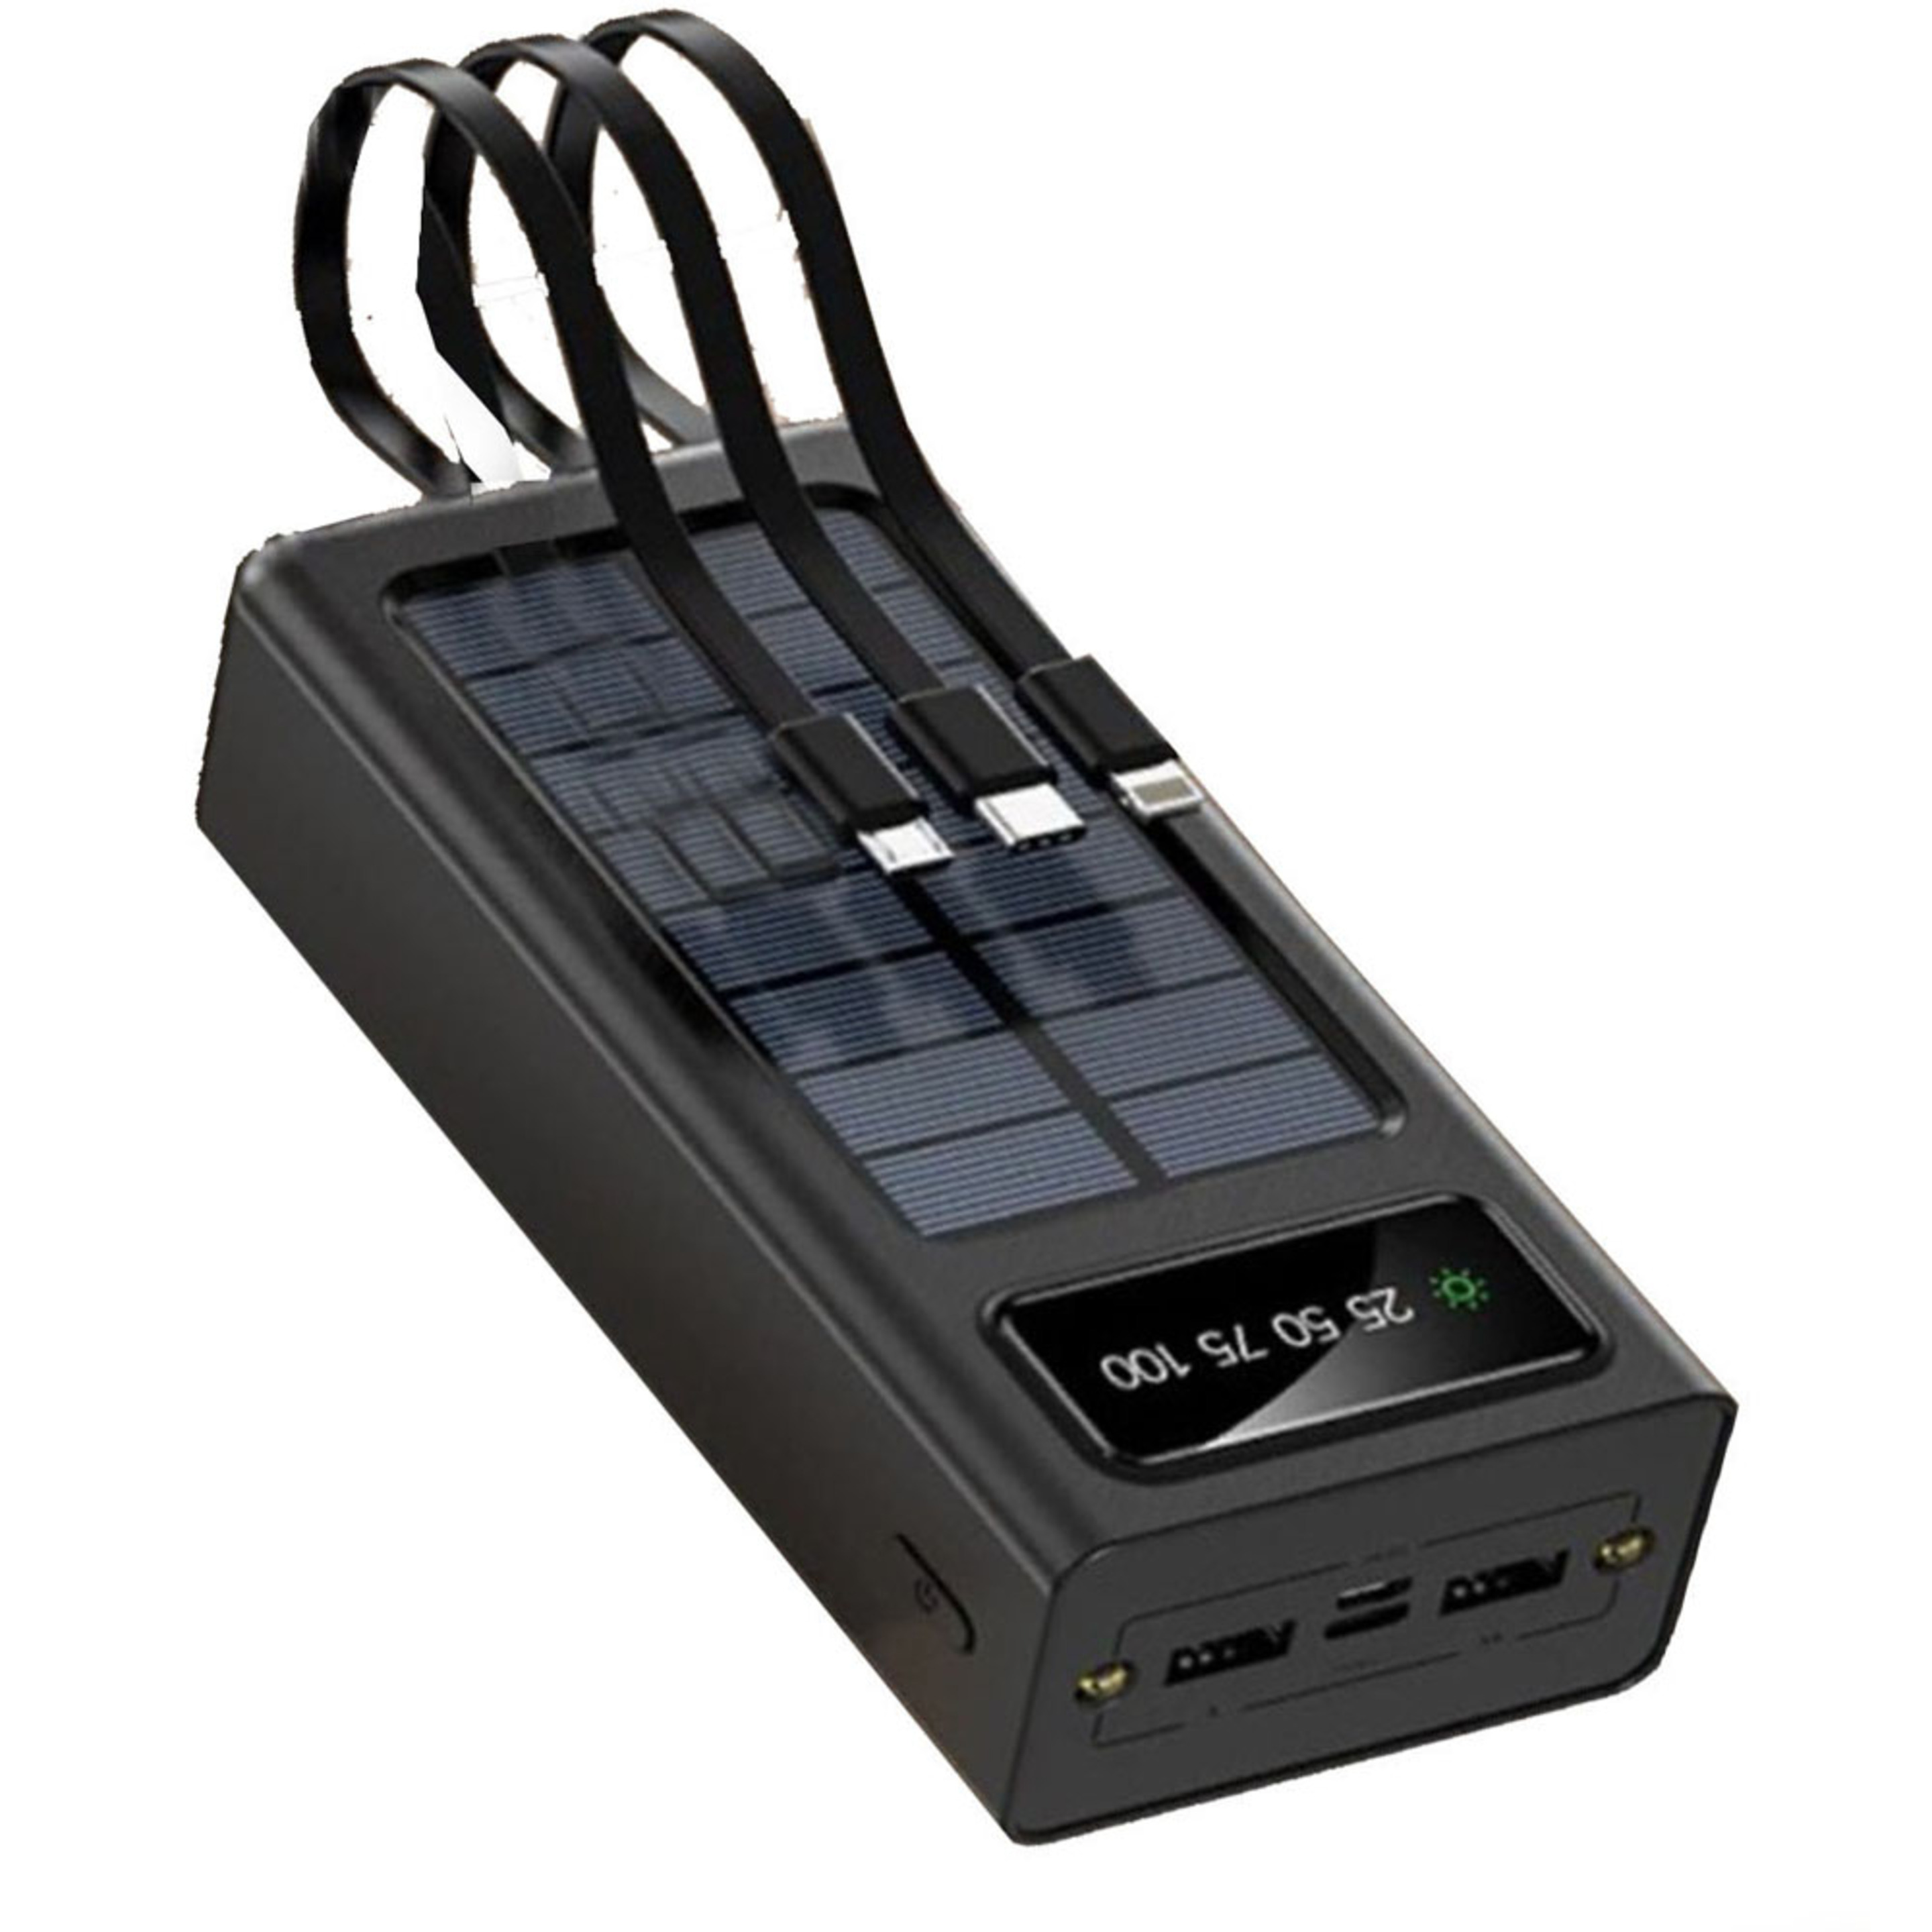 Cargador Solar 20000 Mah Con Linternad Led Bateria Externa Powerbank Potente Portatil - negro - 